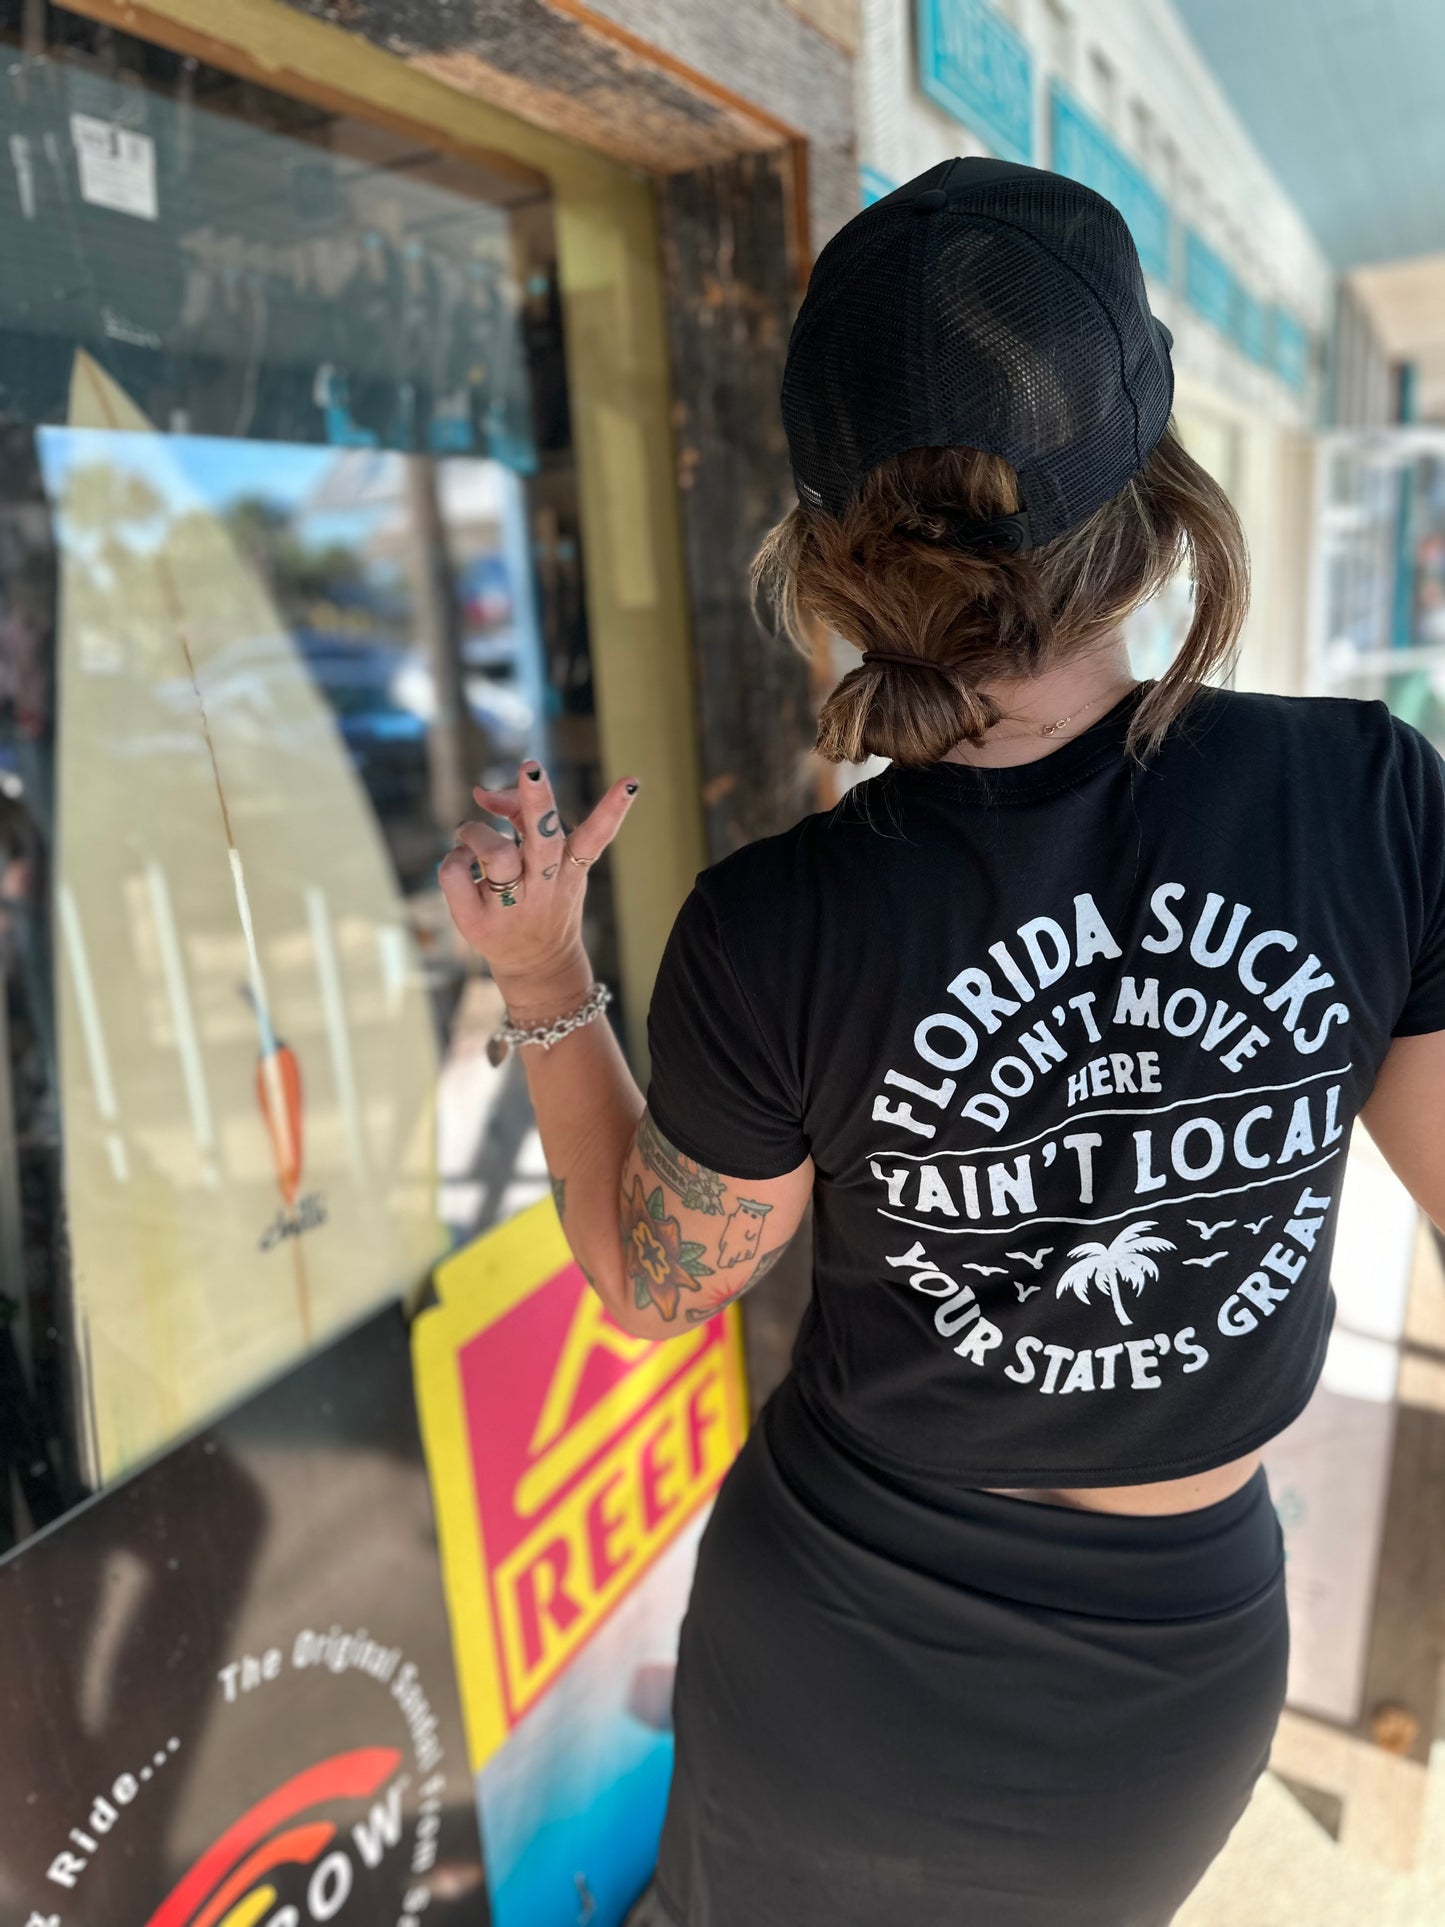 YAIN'T LOCAL | Florida Sux CROP - Black